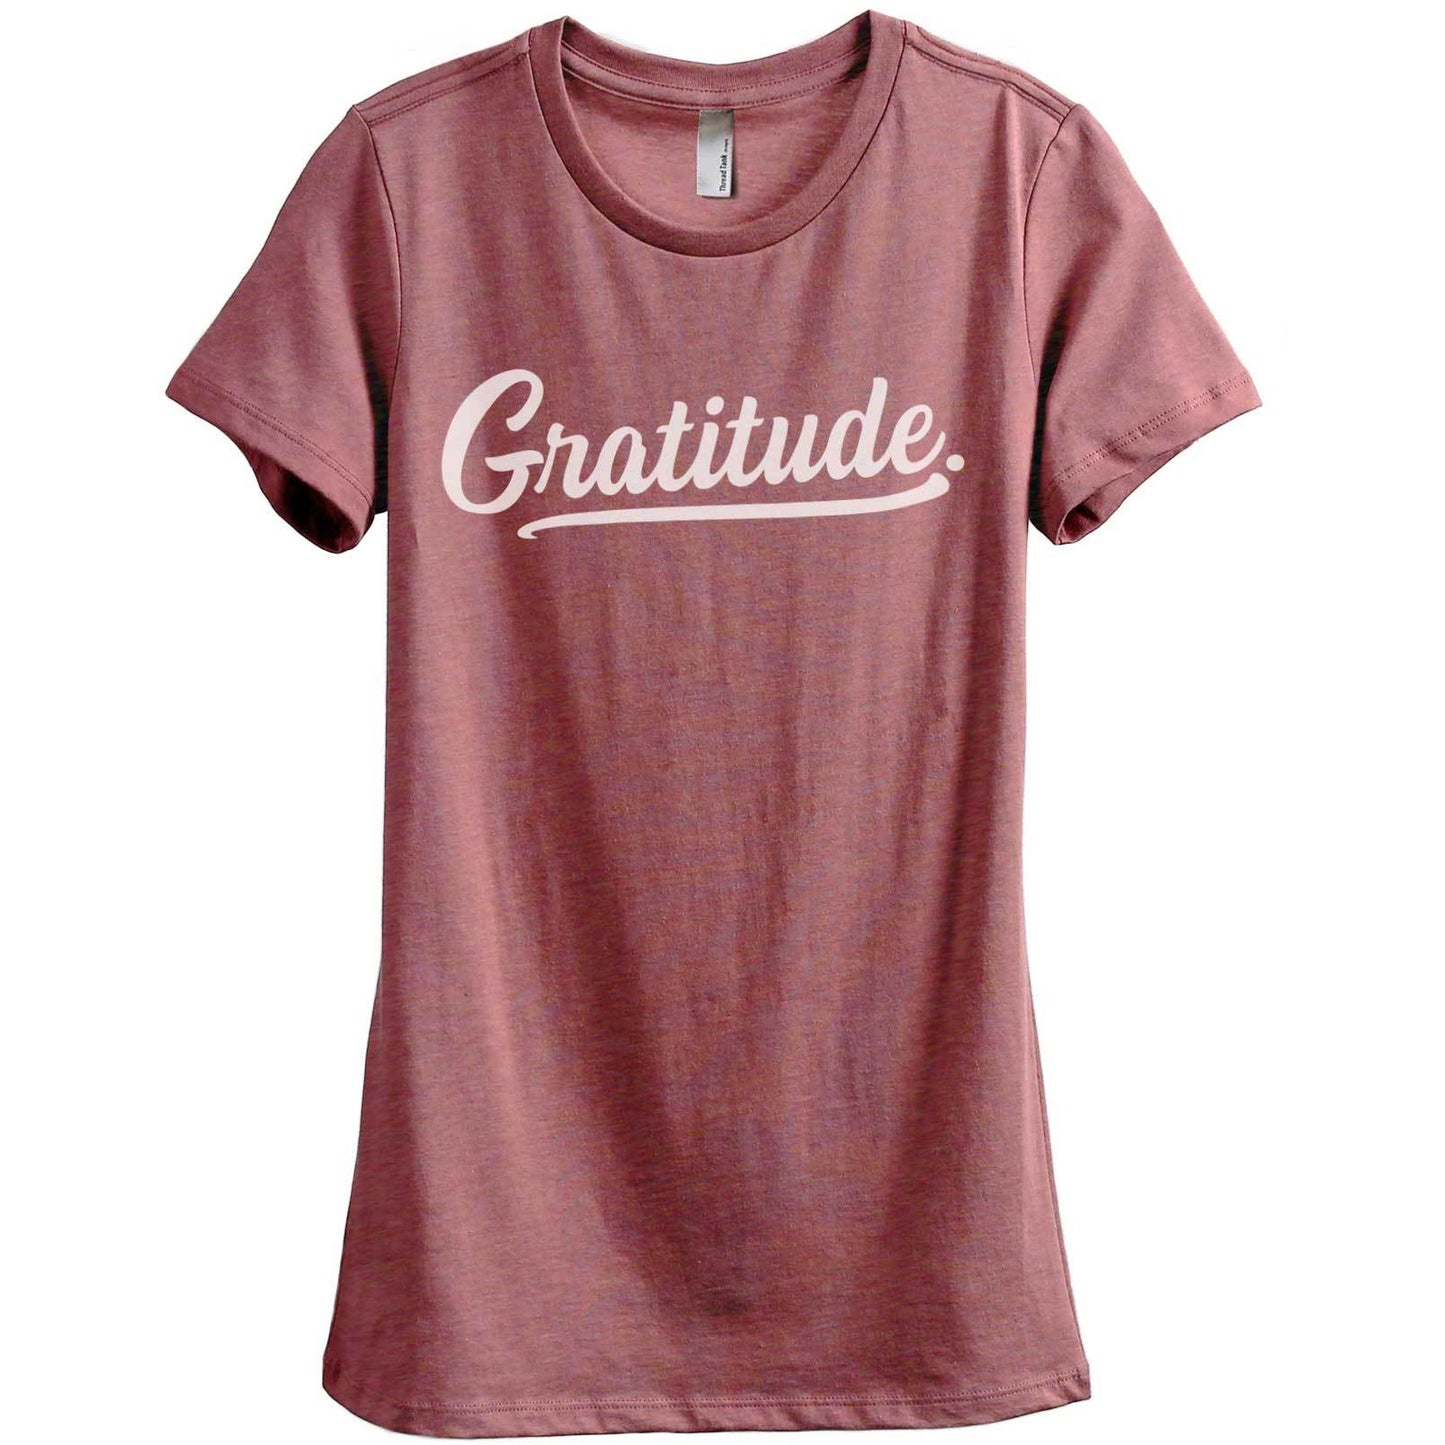 Gratitude Women's Relaxed Crewneck T-Shirt Top Tee Heather Rouge
